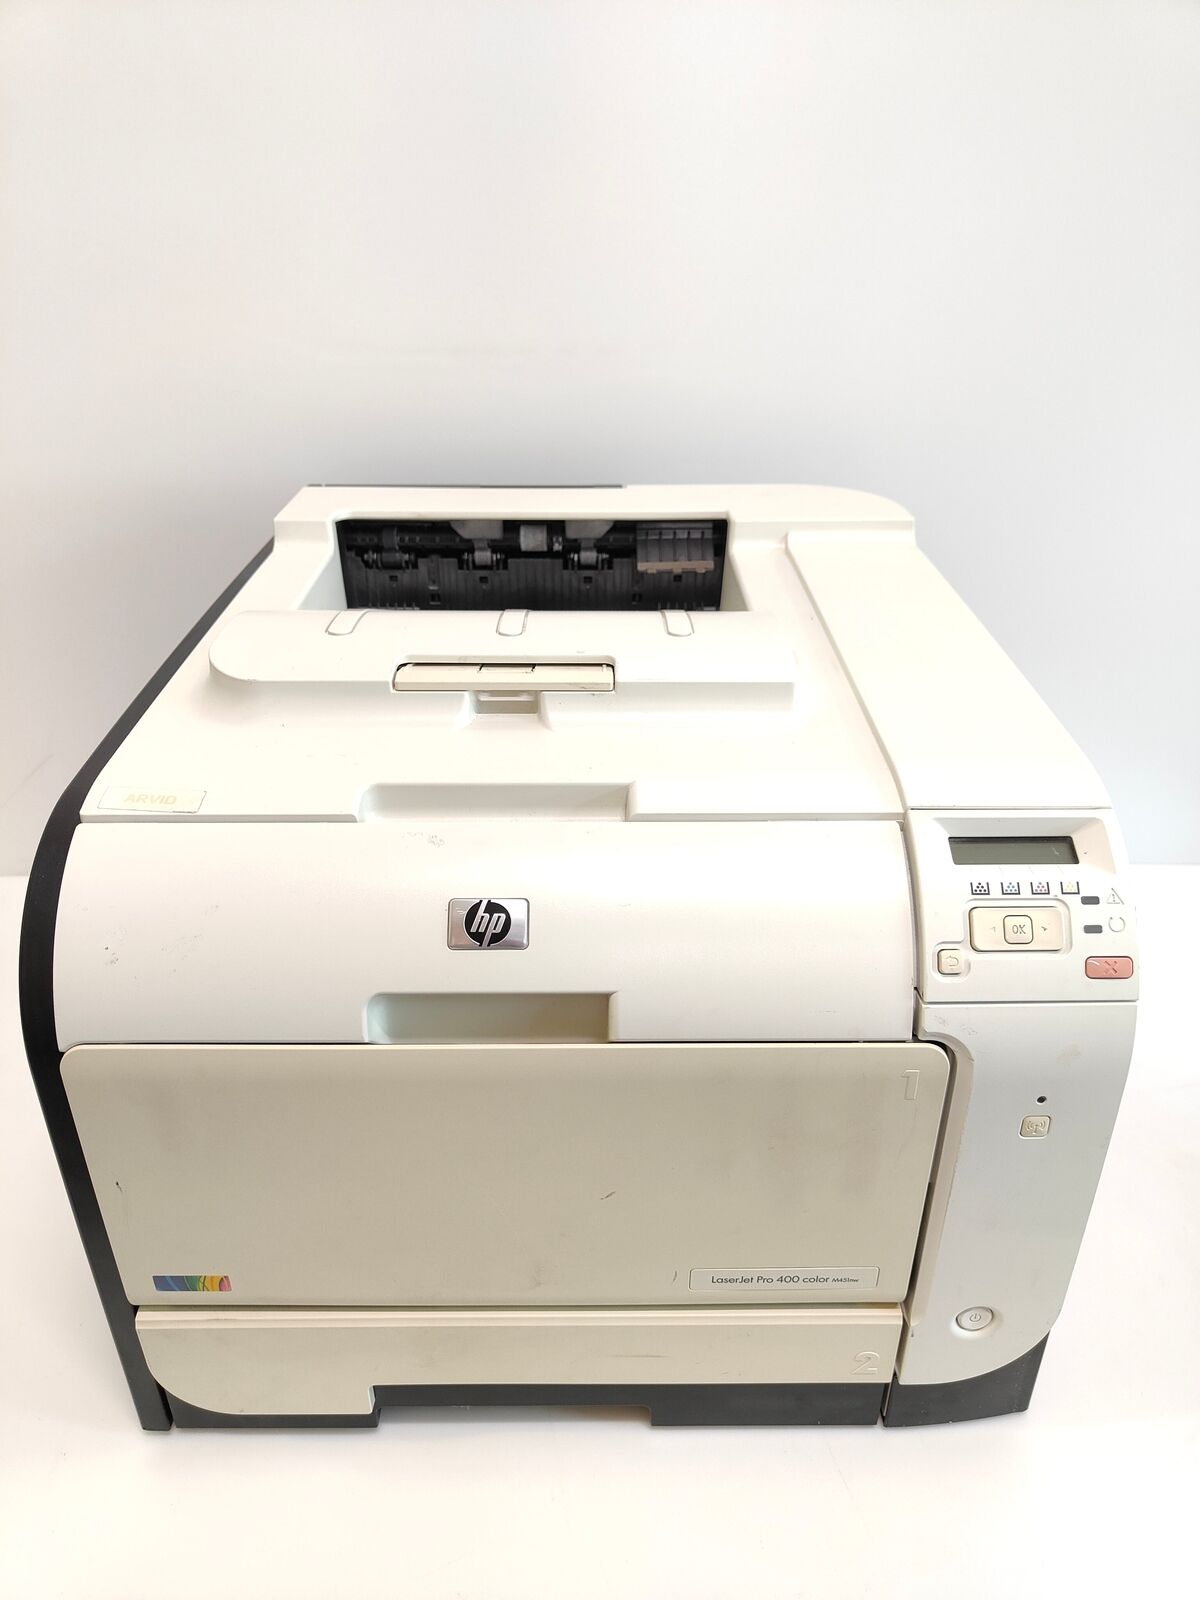 HP LaserJet Pro 400 colour M451nw Laser Printer